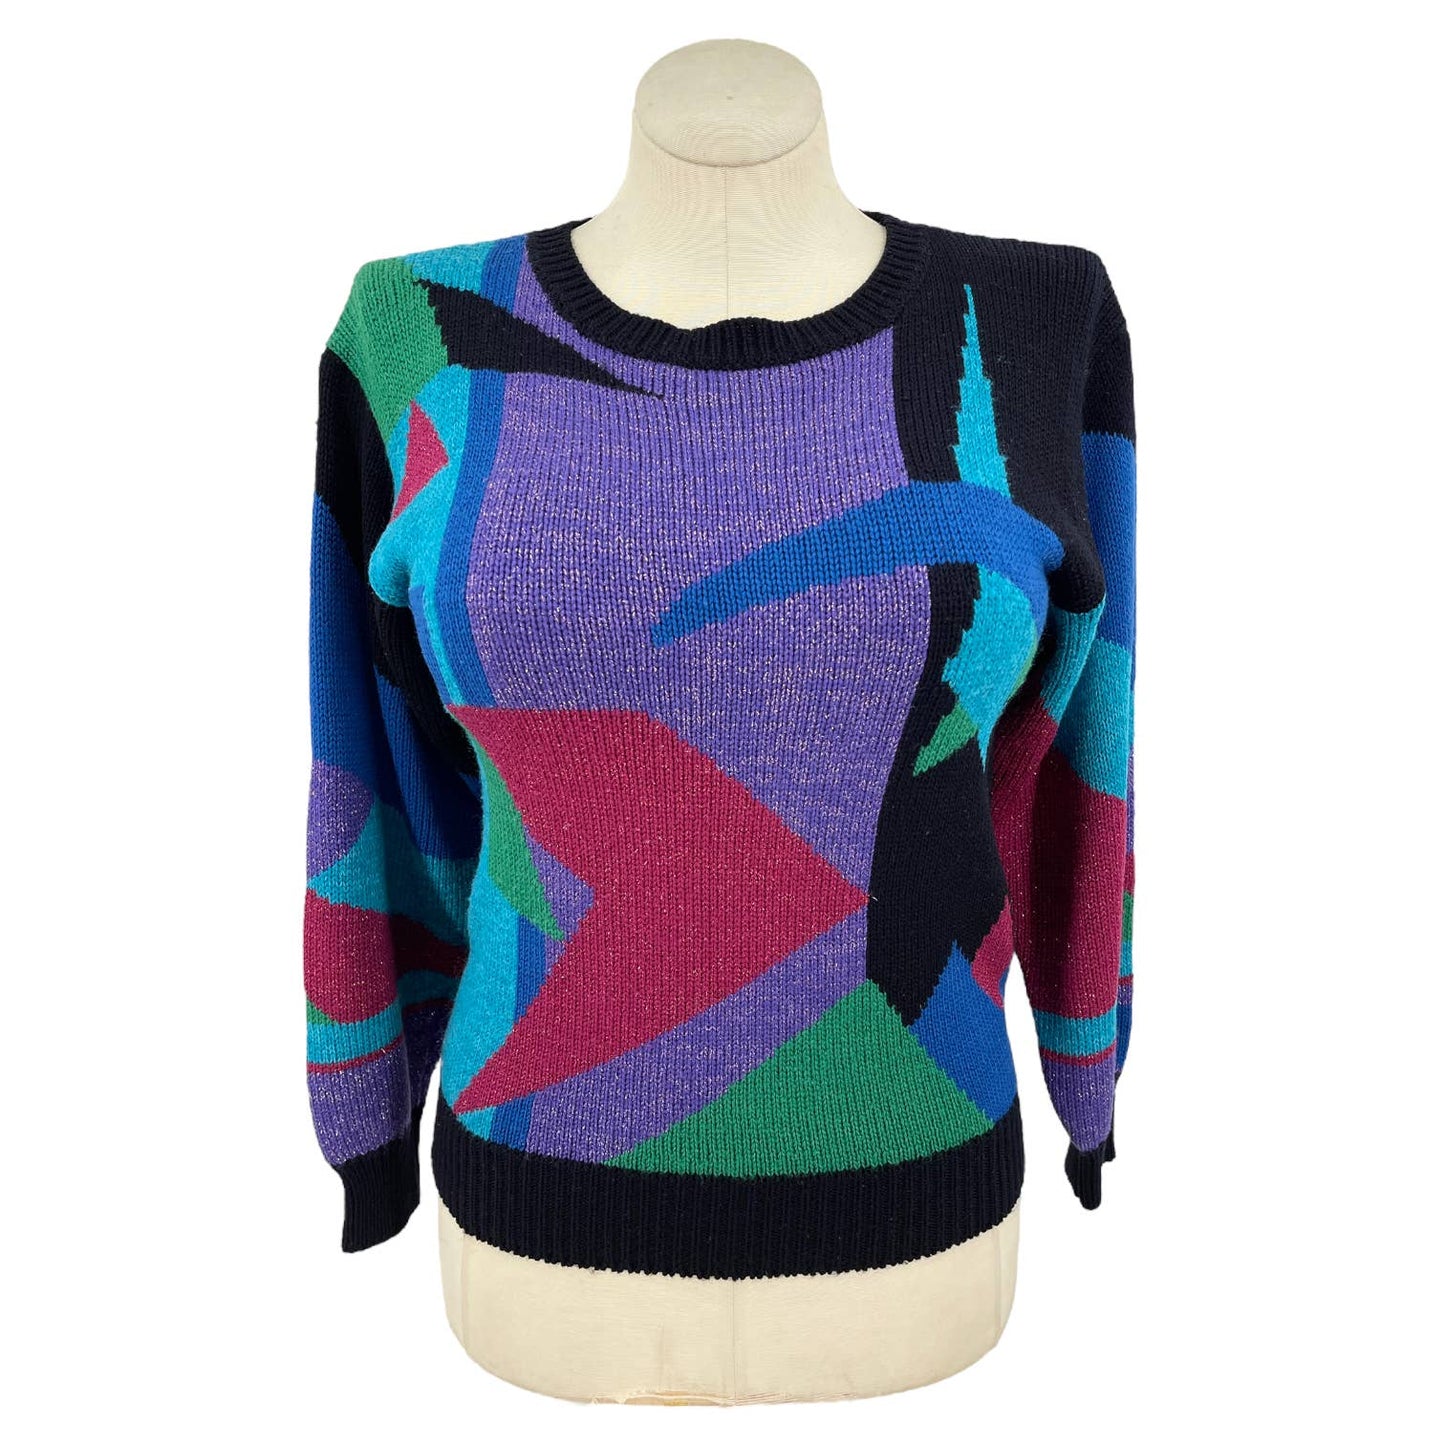 Vintage 80s Black Geometric Sweater Bright Metallic Shapes Pullover Koret Size M L